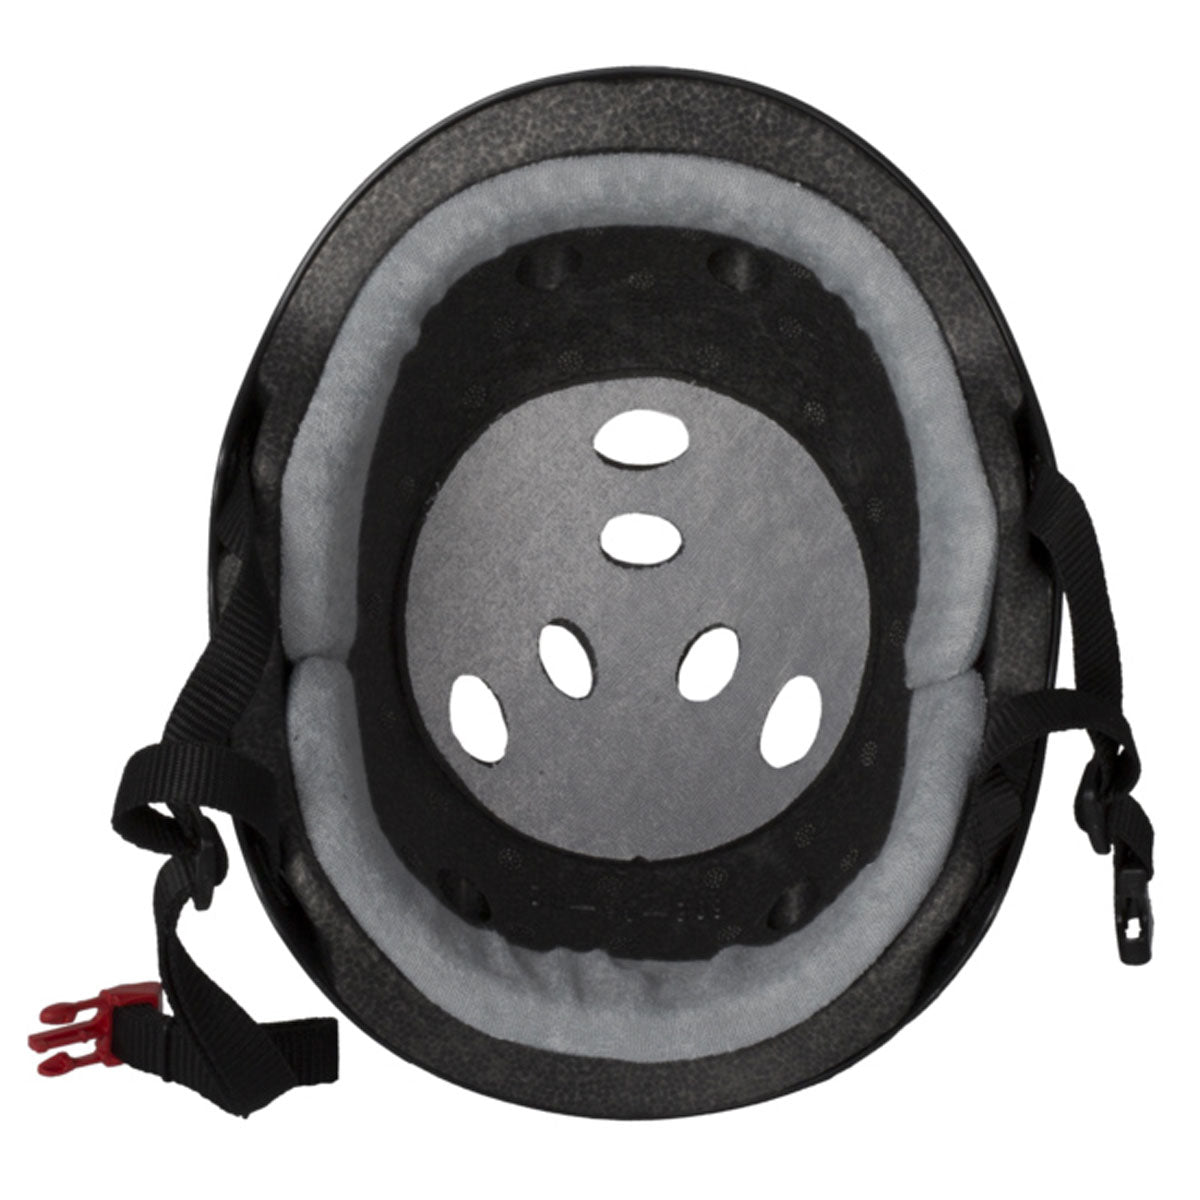 Triple Eight Certified Sweatsaver With Visor Helmet - Black Rubber image 2